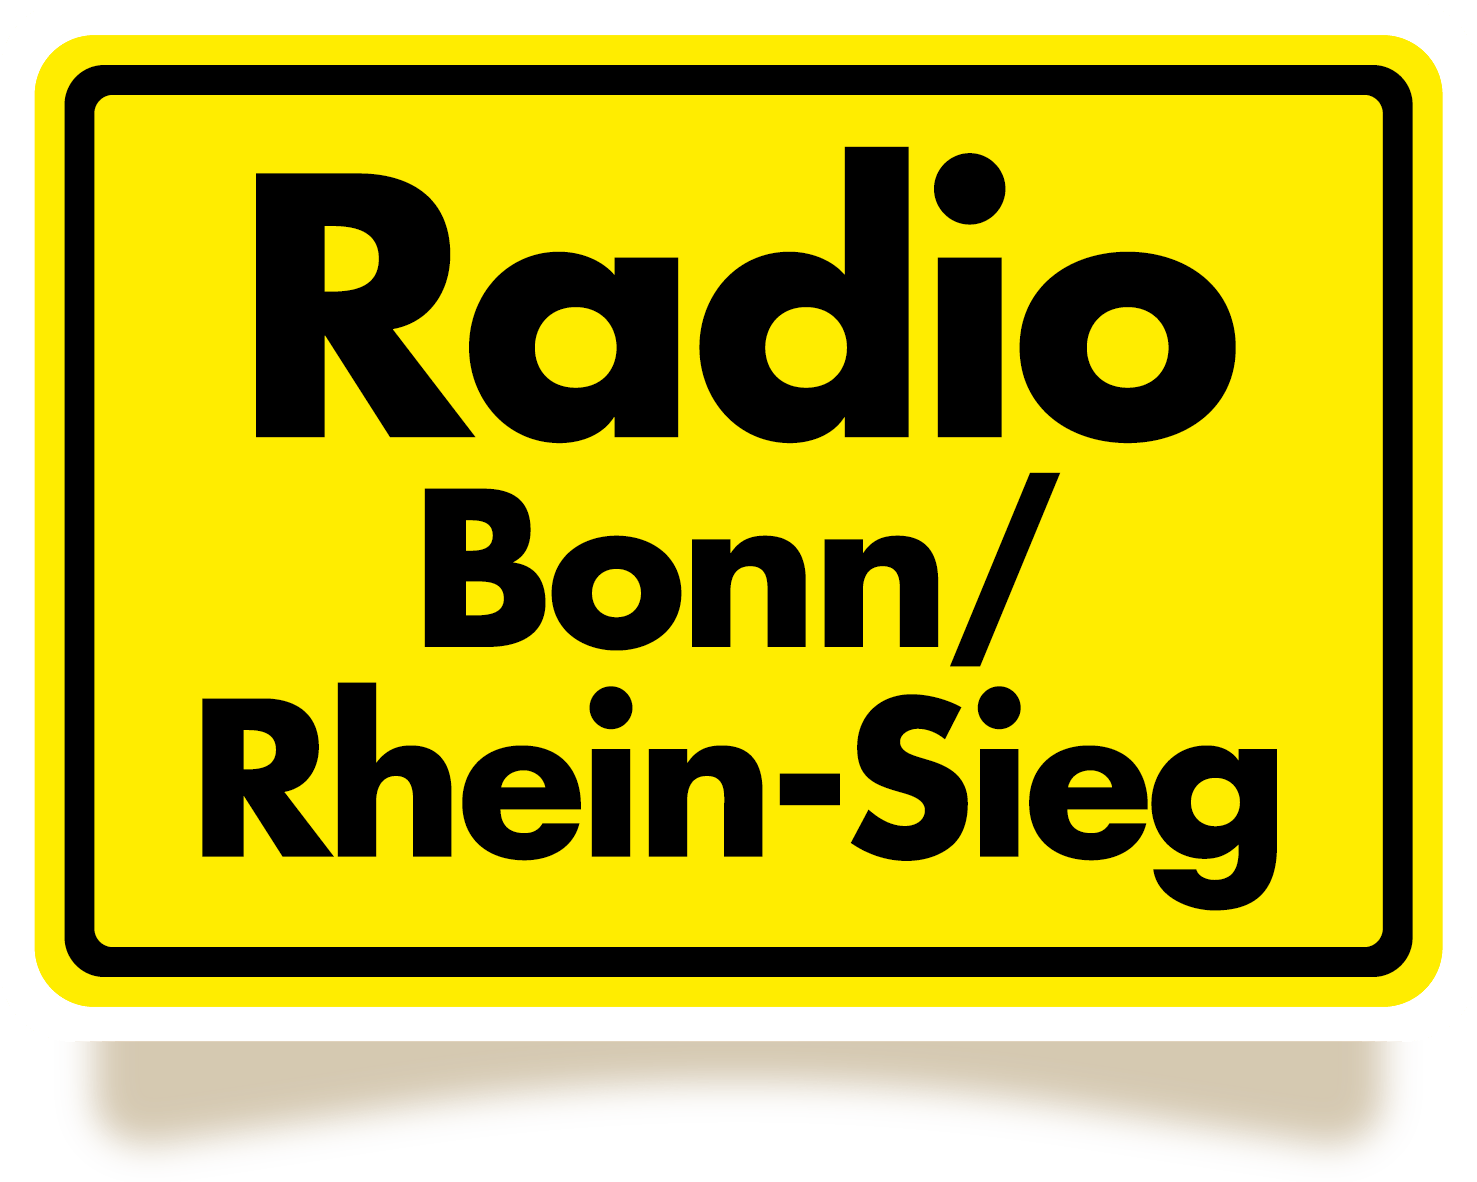 Profile RBRS Radio Tv Channels